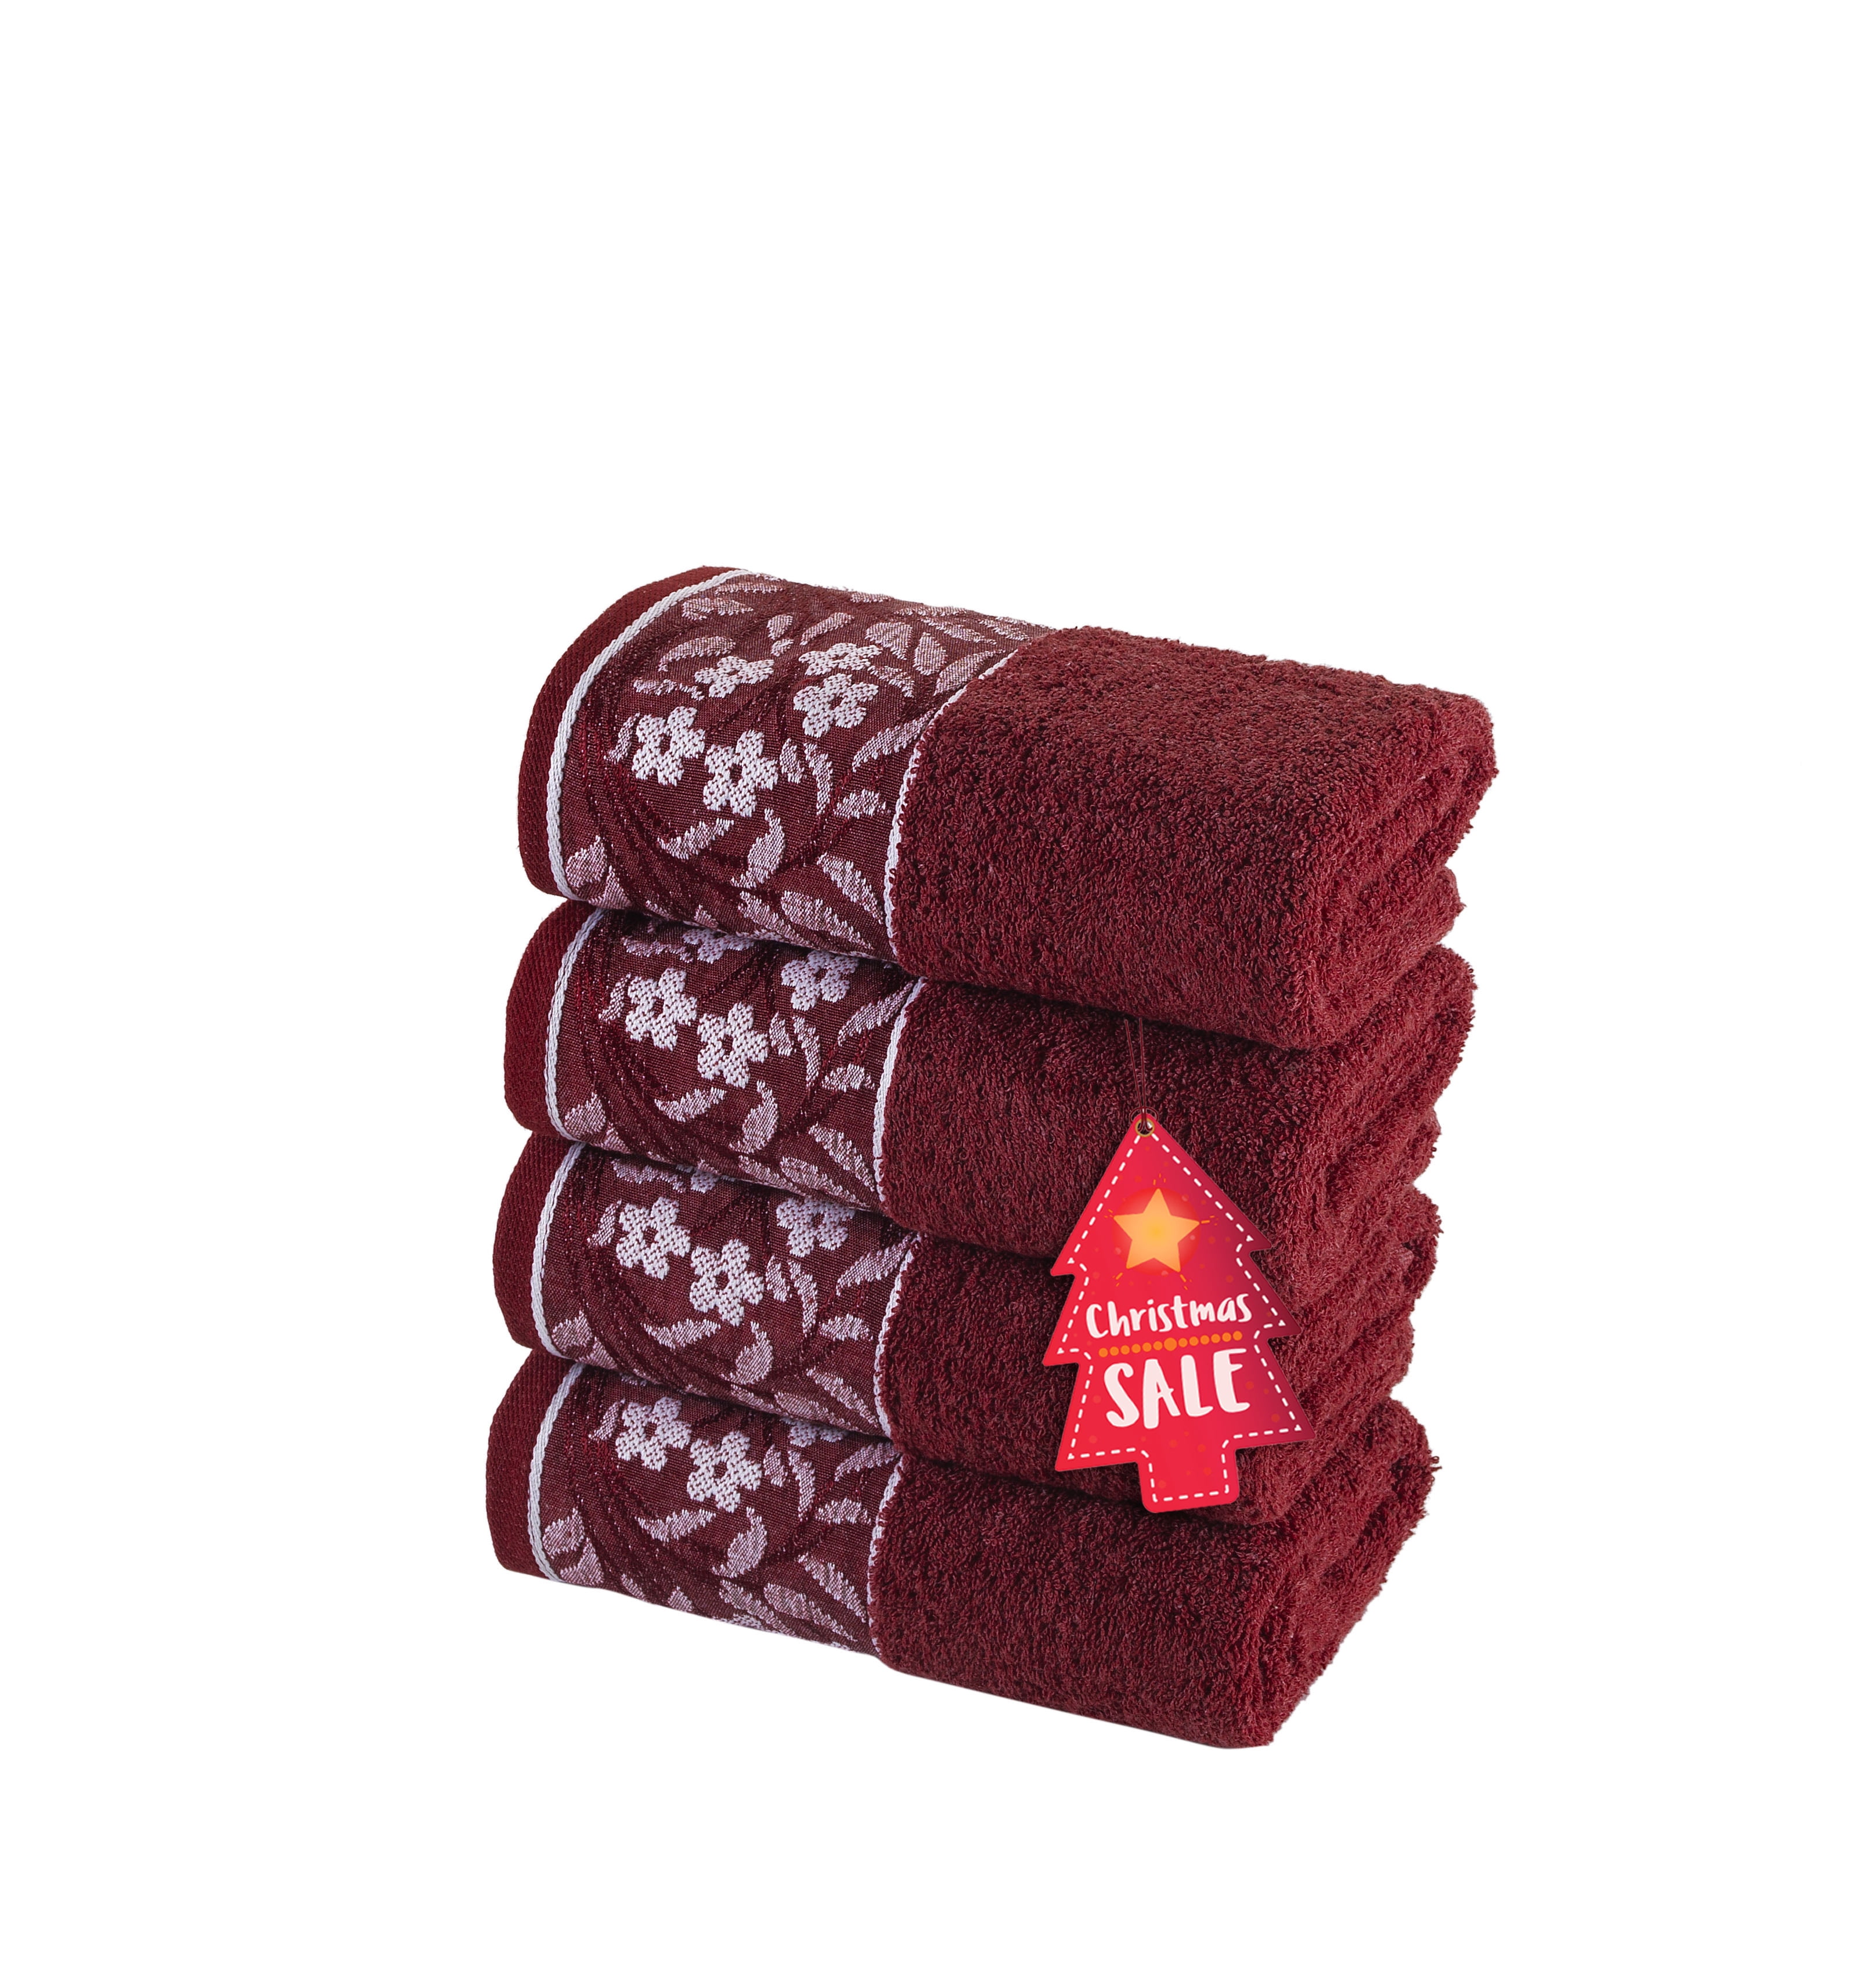 Flat Loop Hand Towels - 4 Pack Ash